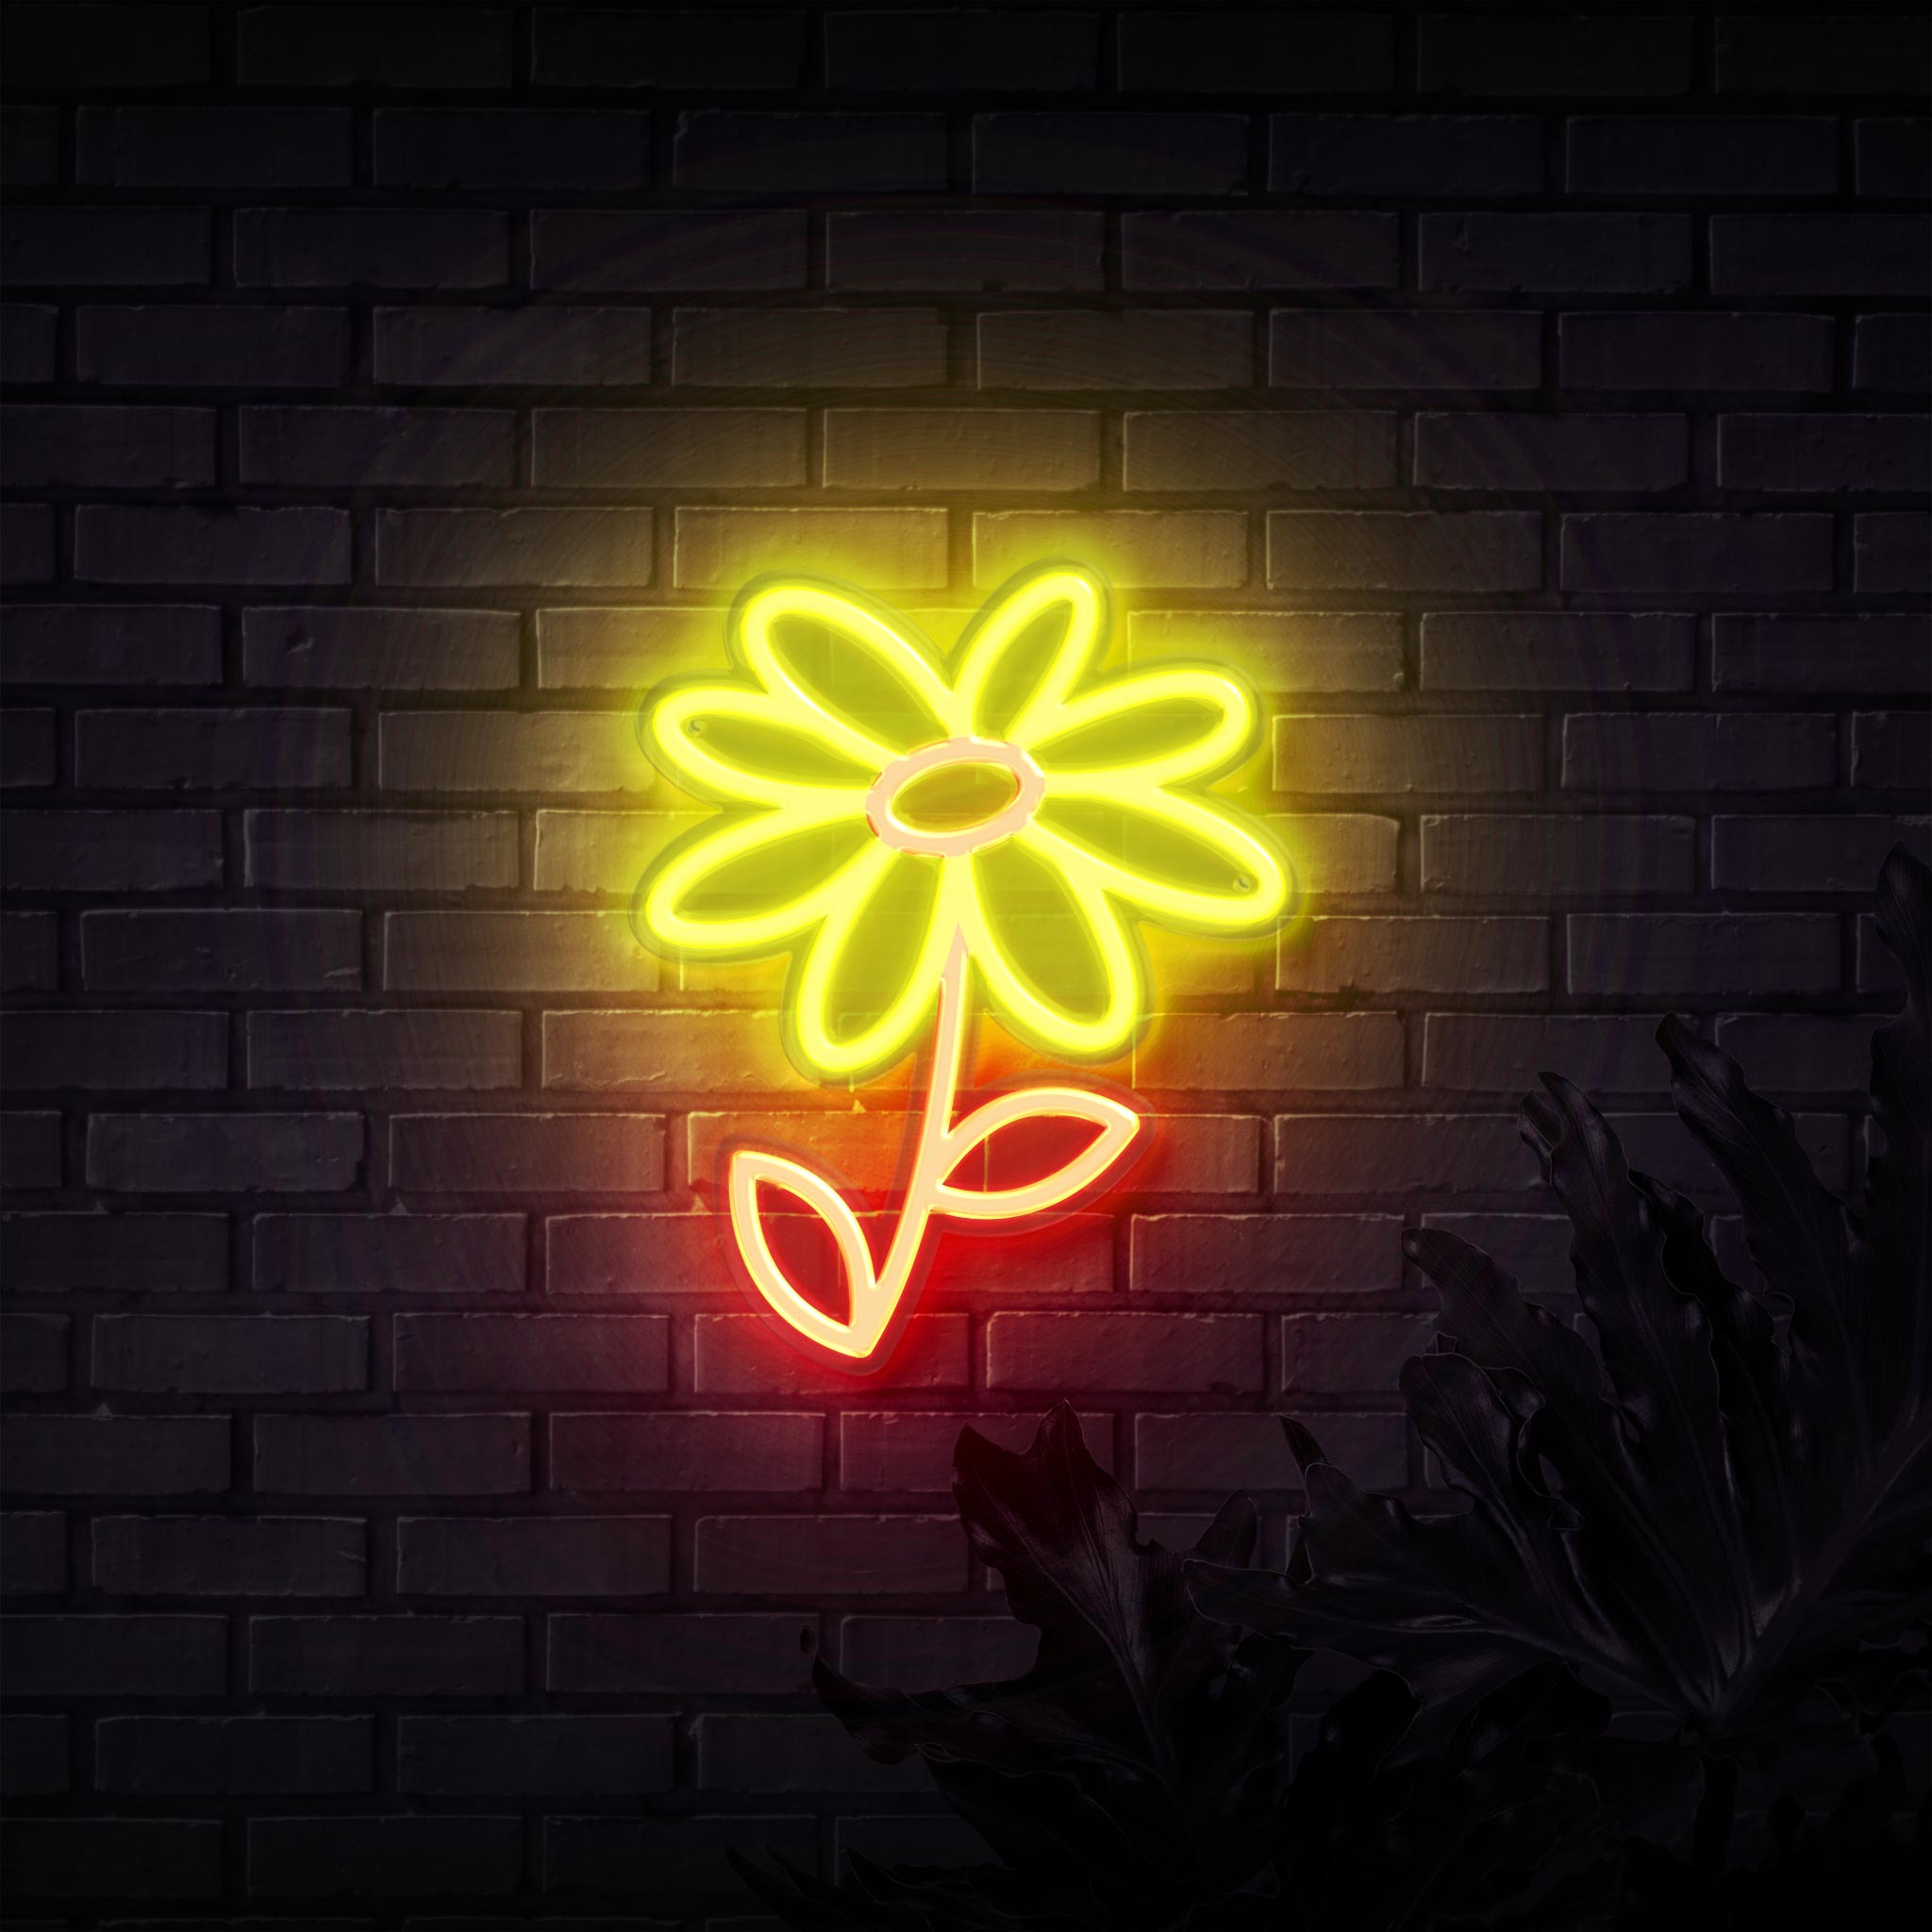 Daisy flower neon sign